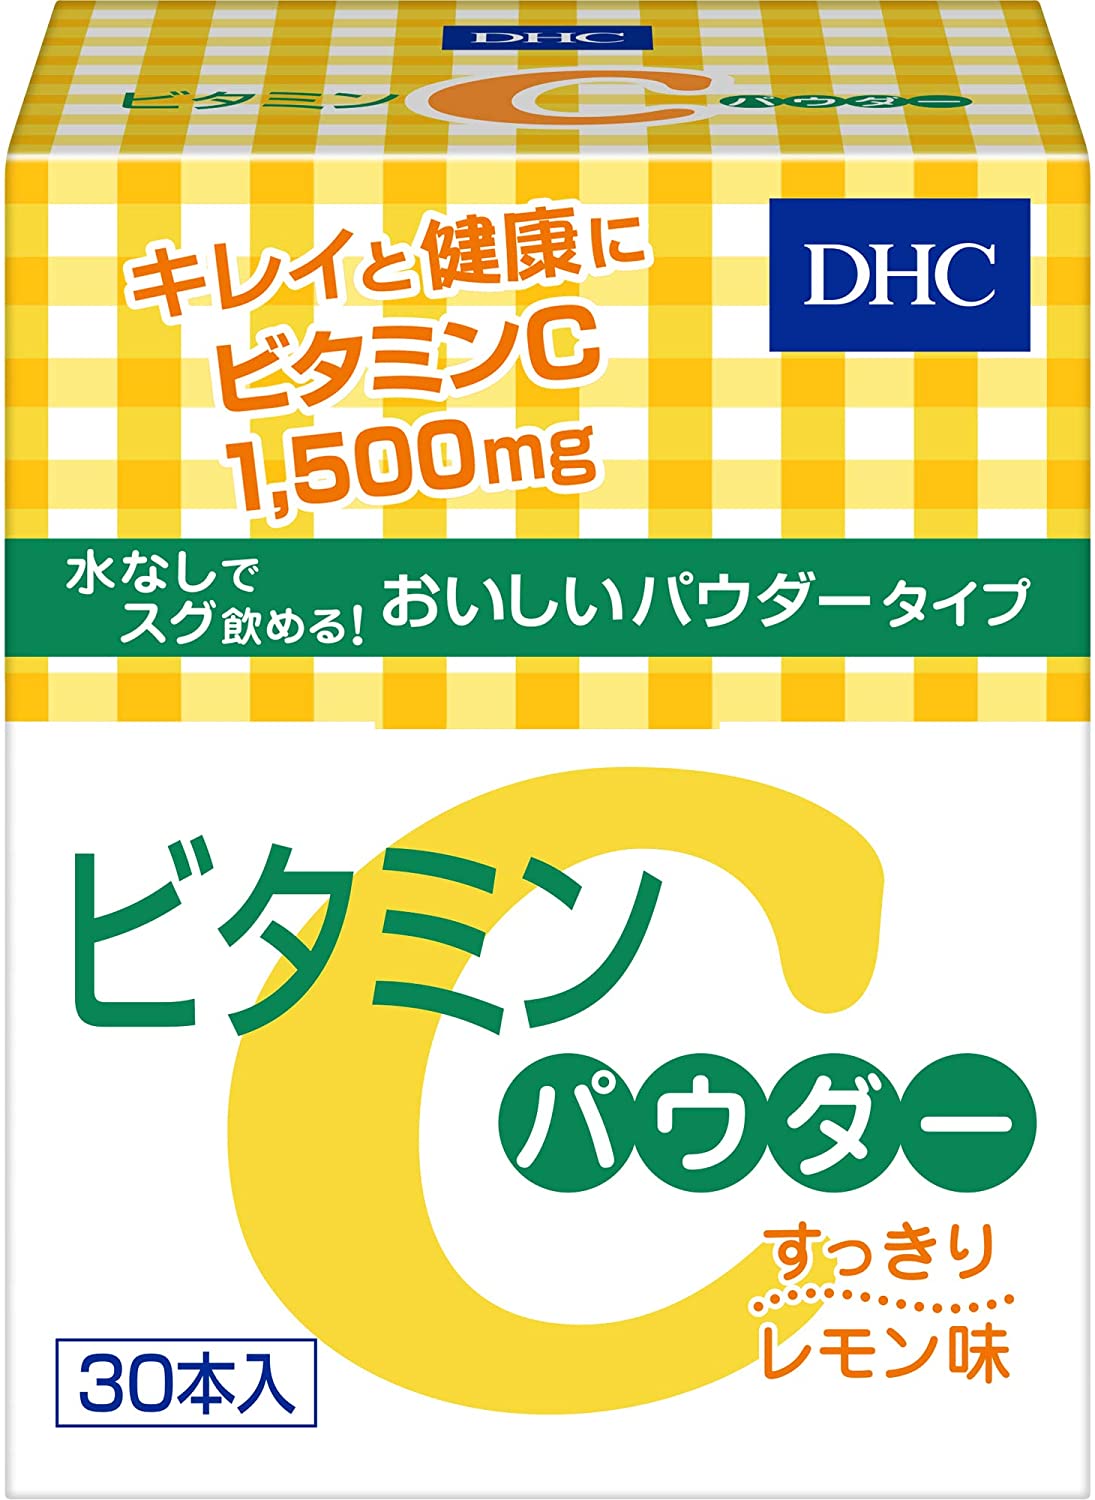 DHC Vitamin C Powder Lemon 1500 mg. วิตามินซีเข้มข้นชนิดผง รสเลม่อน สูตรเพิ่มวิตามิน B2 (สำหรับ 30 วัน)